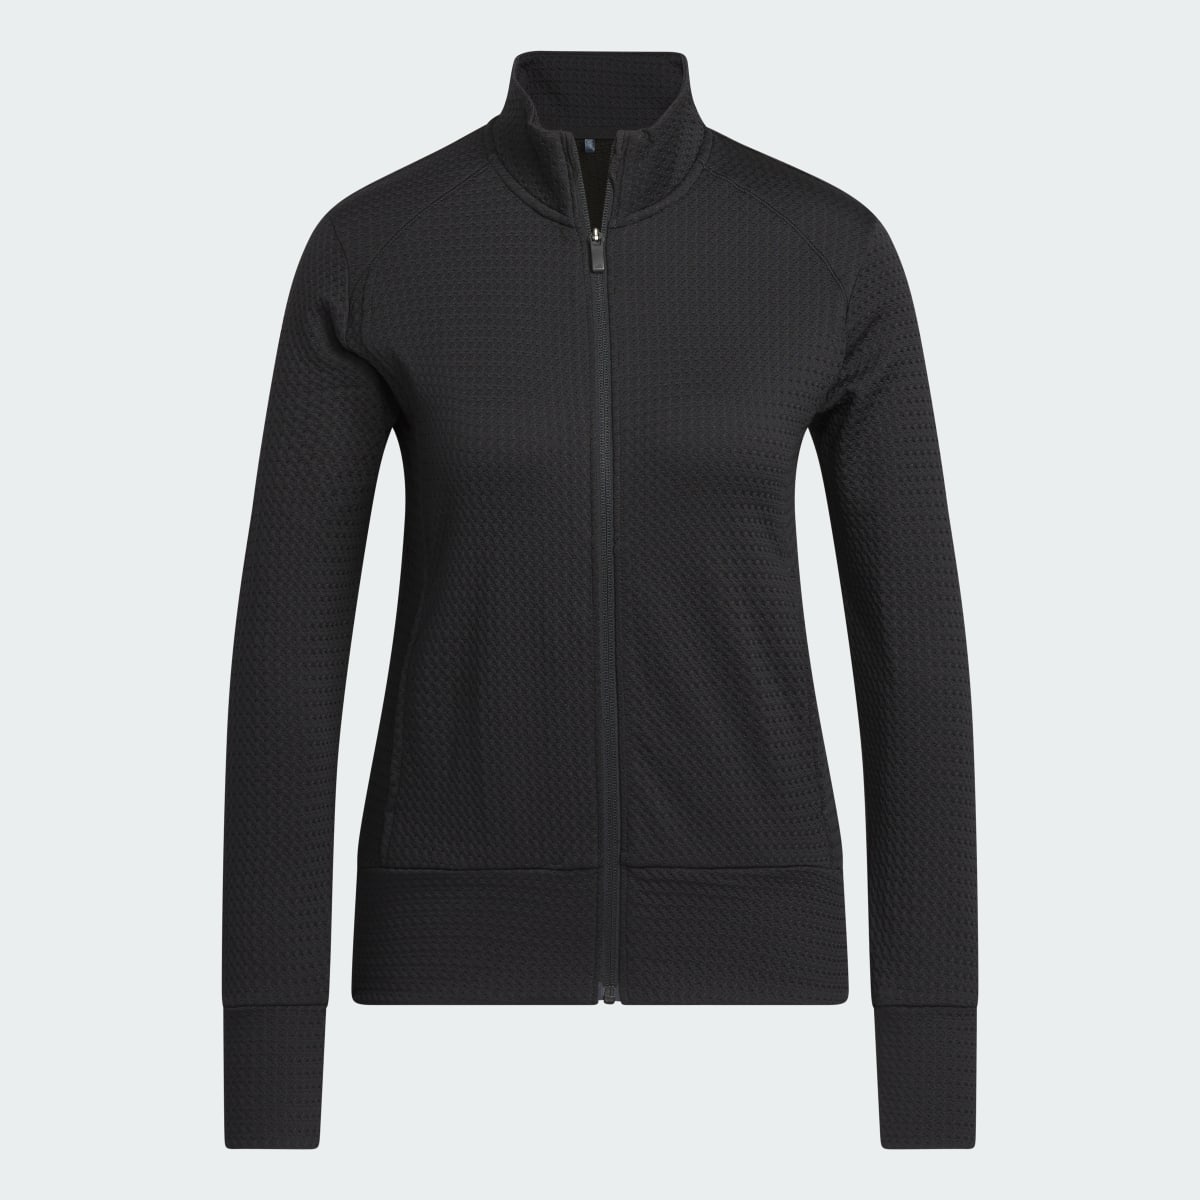 Adidas Women's Ultimate365 Textured Jacket. 5